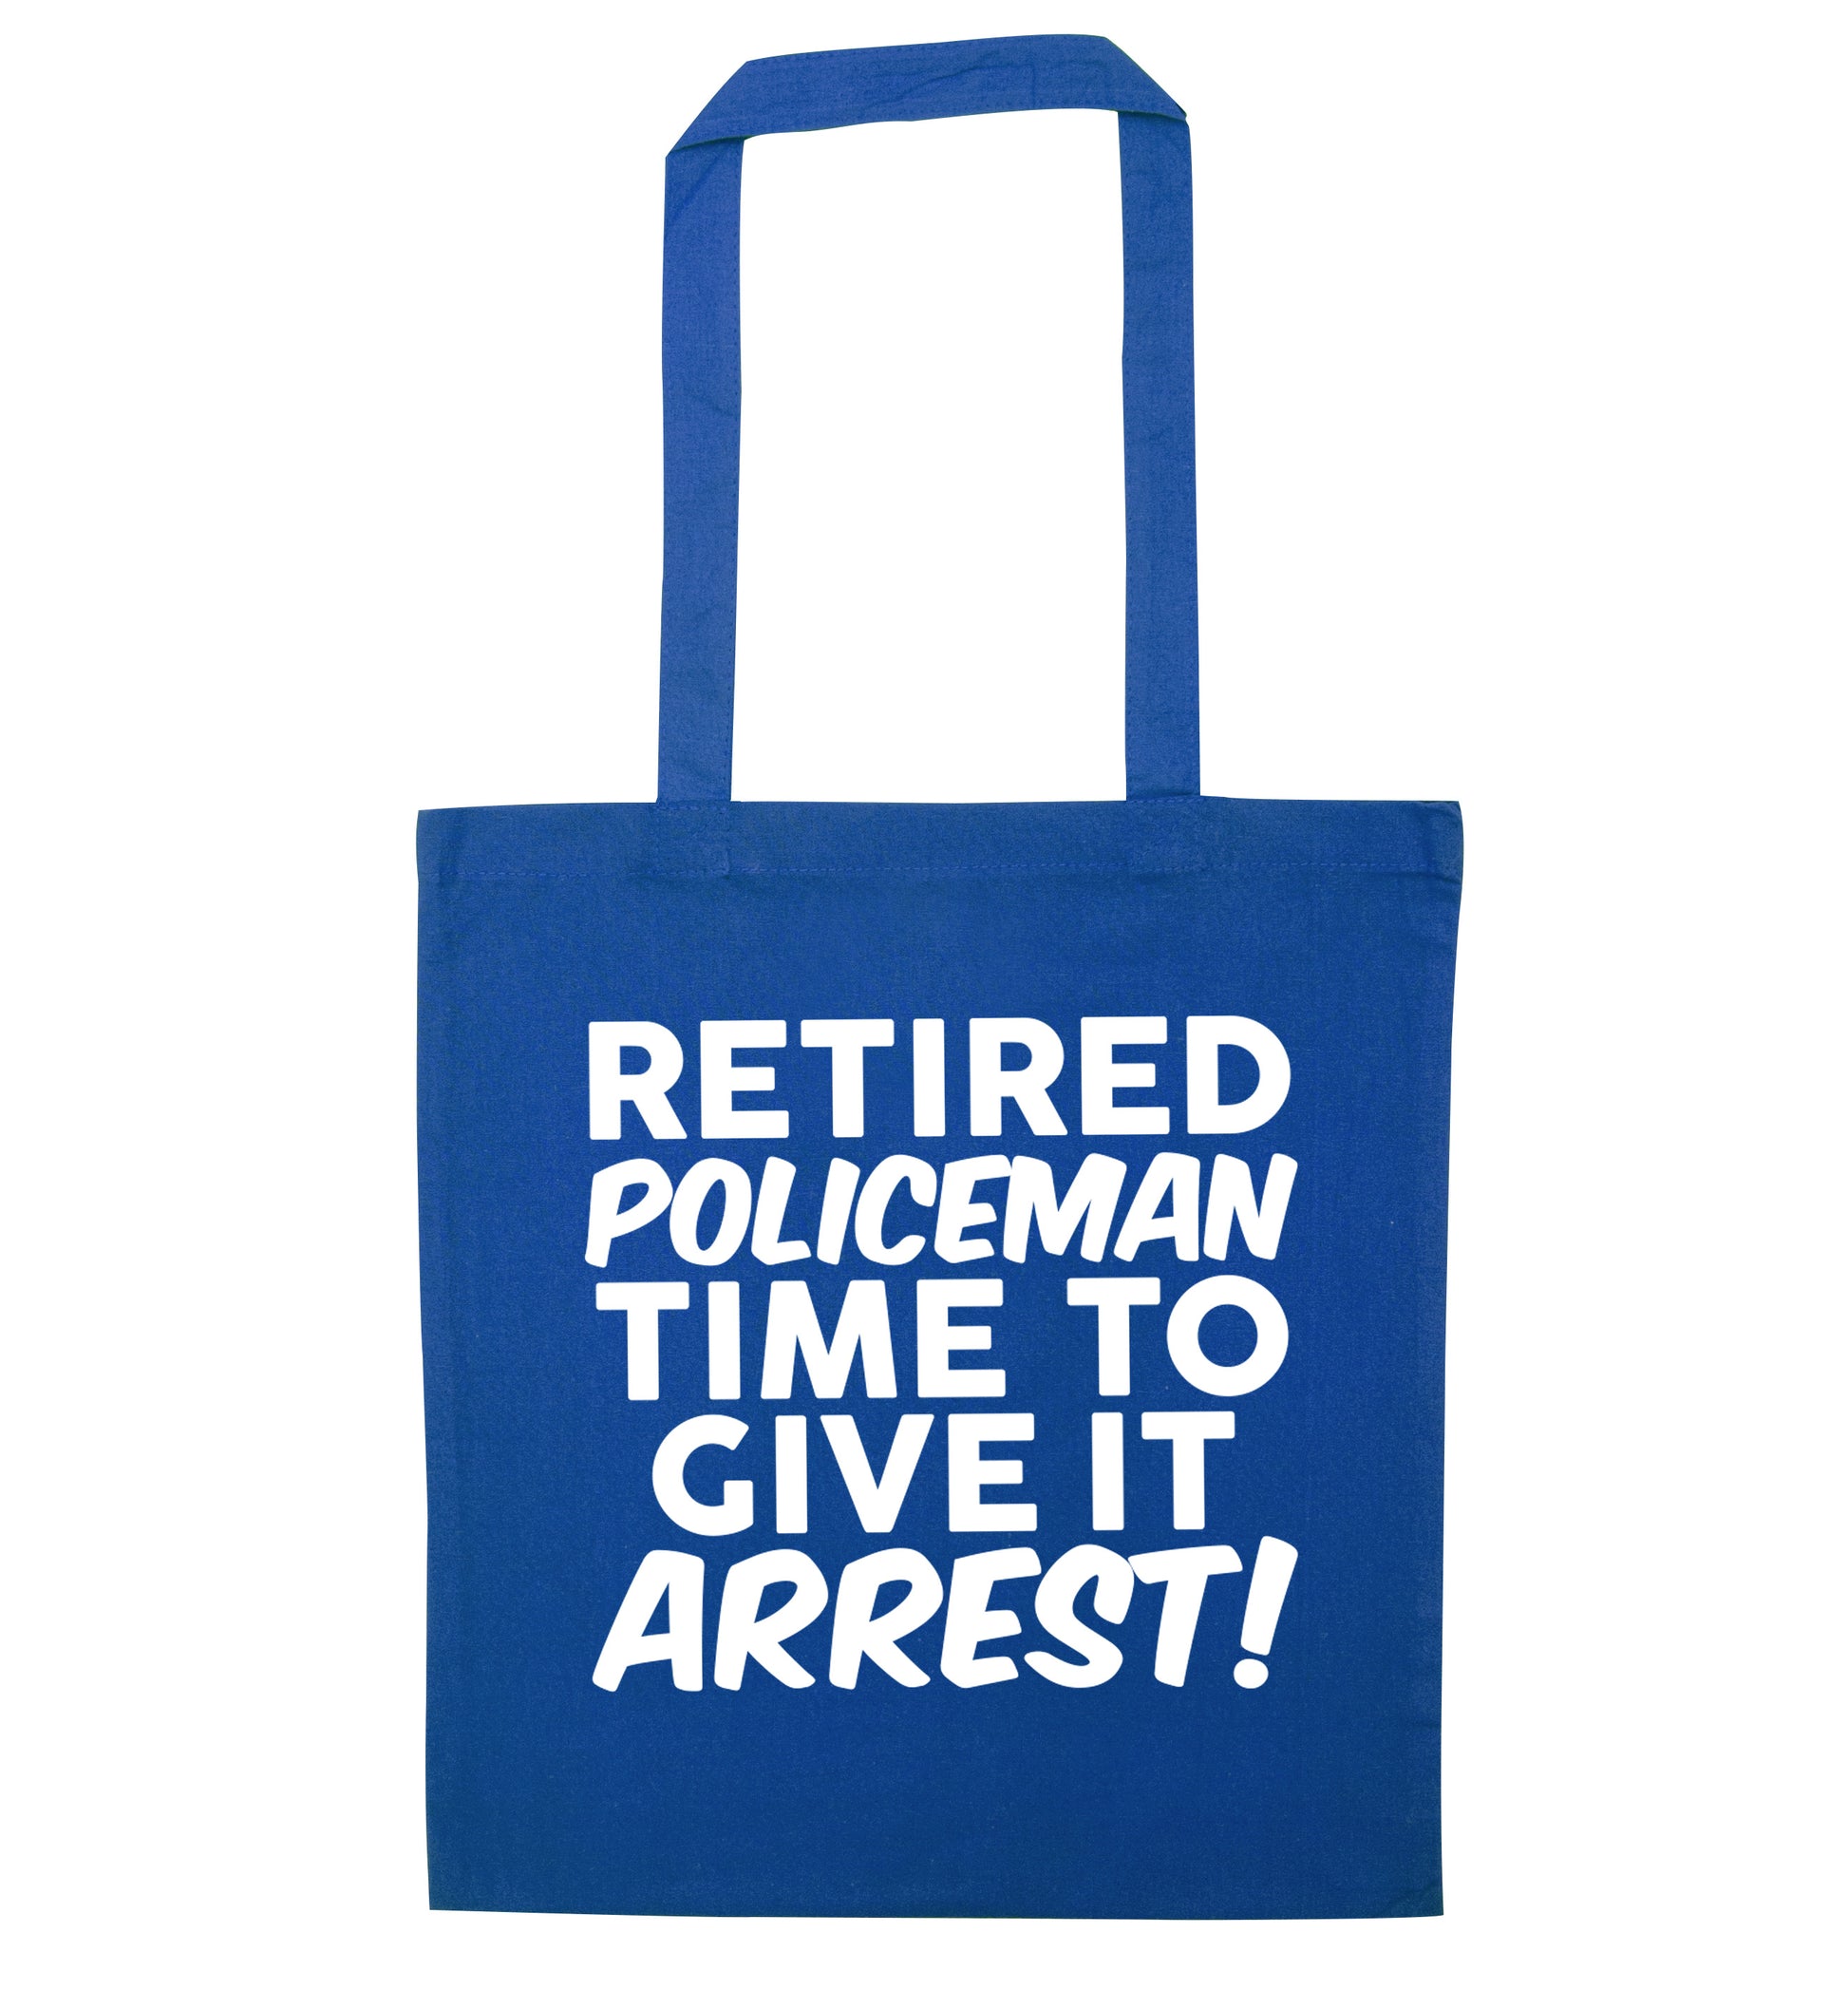 Retired policeman give it arresst! blue tote bag